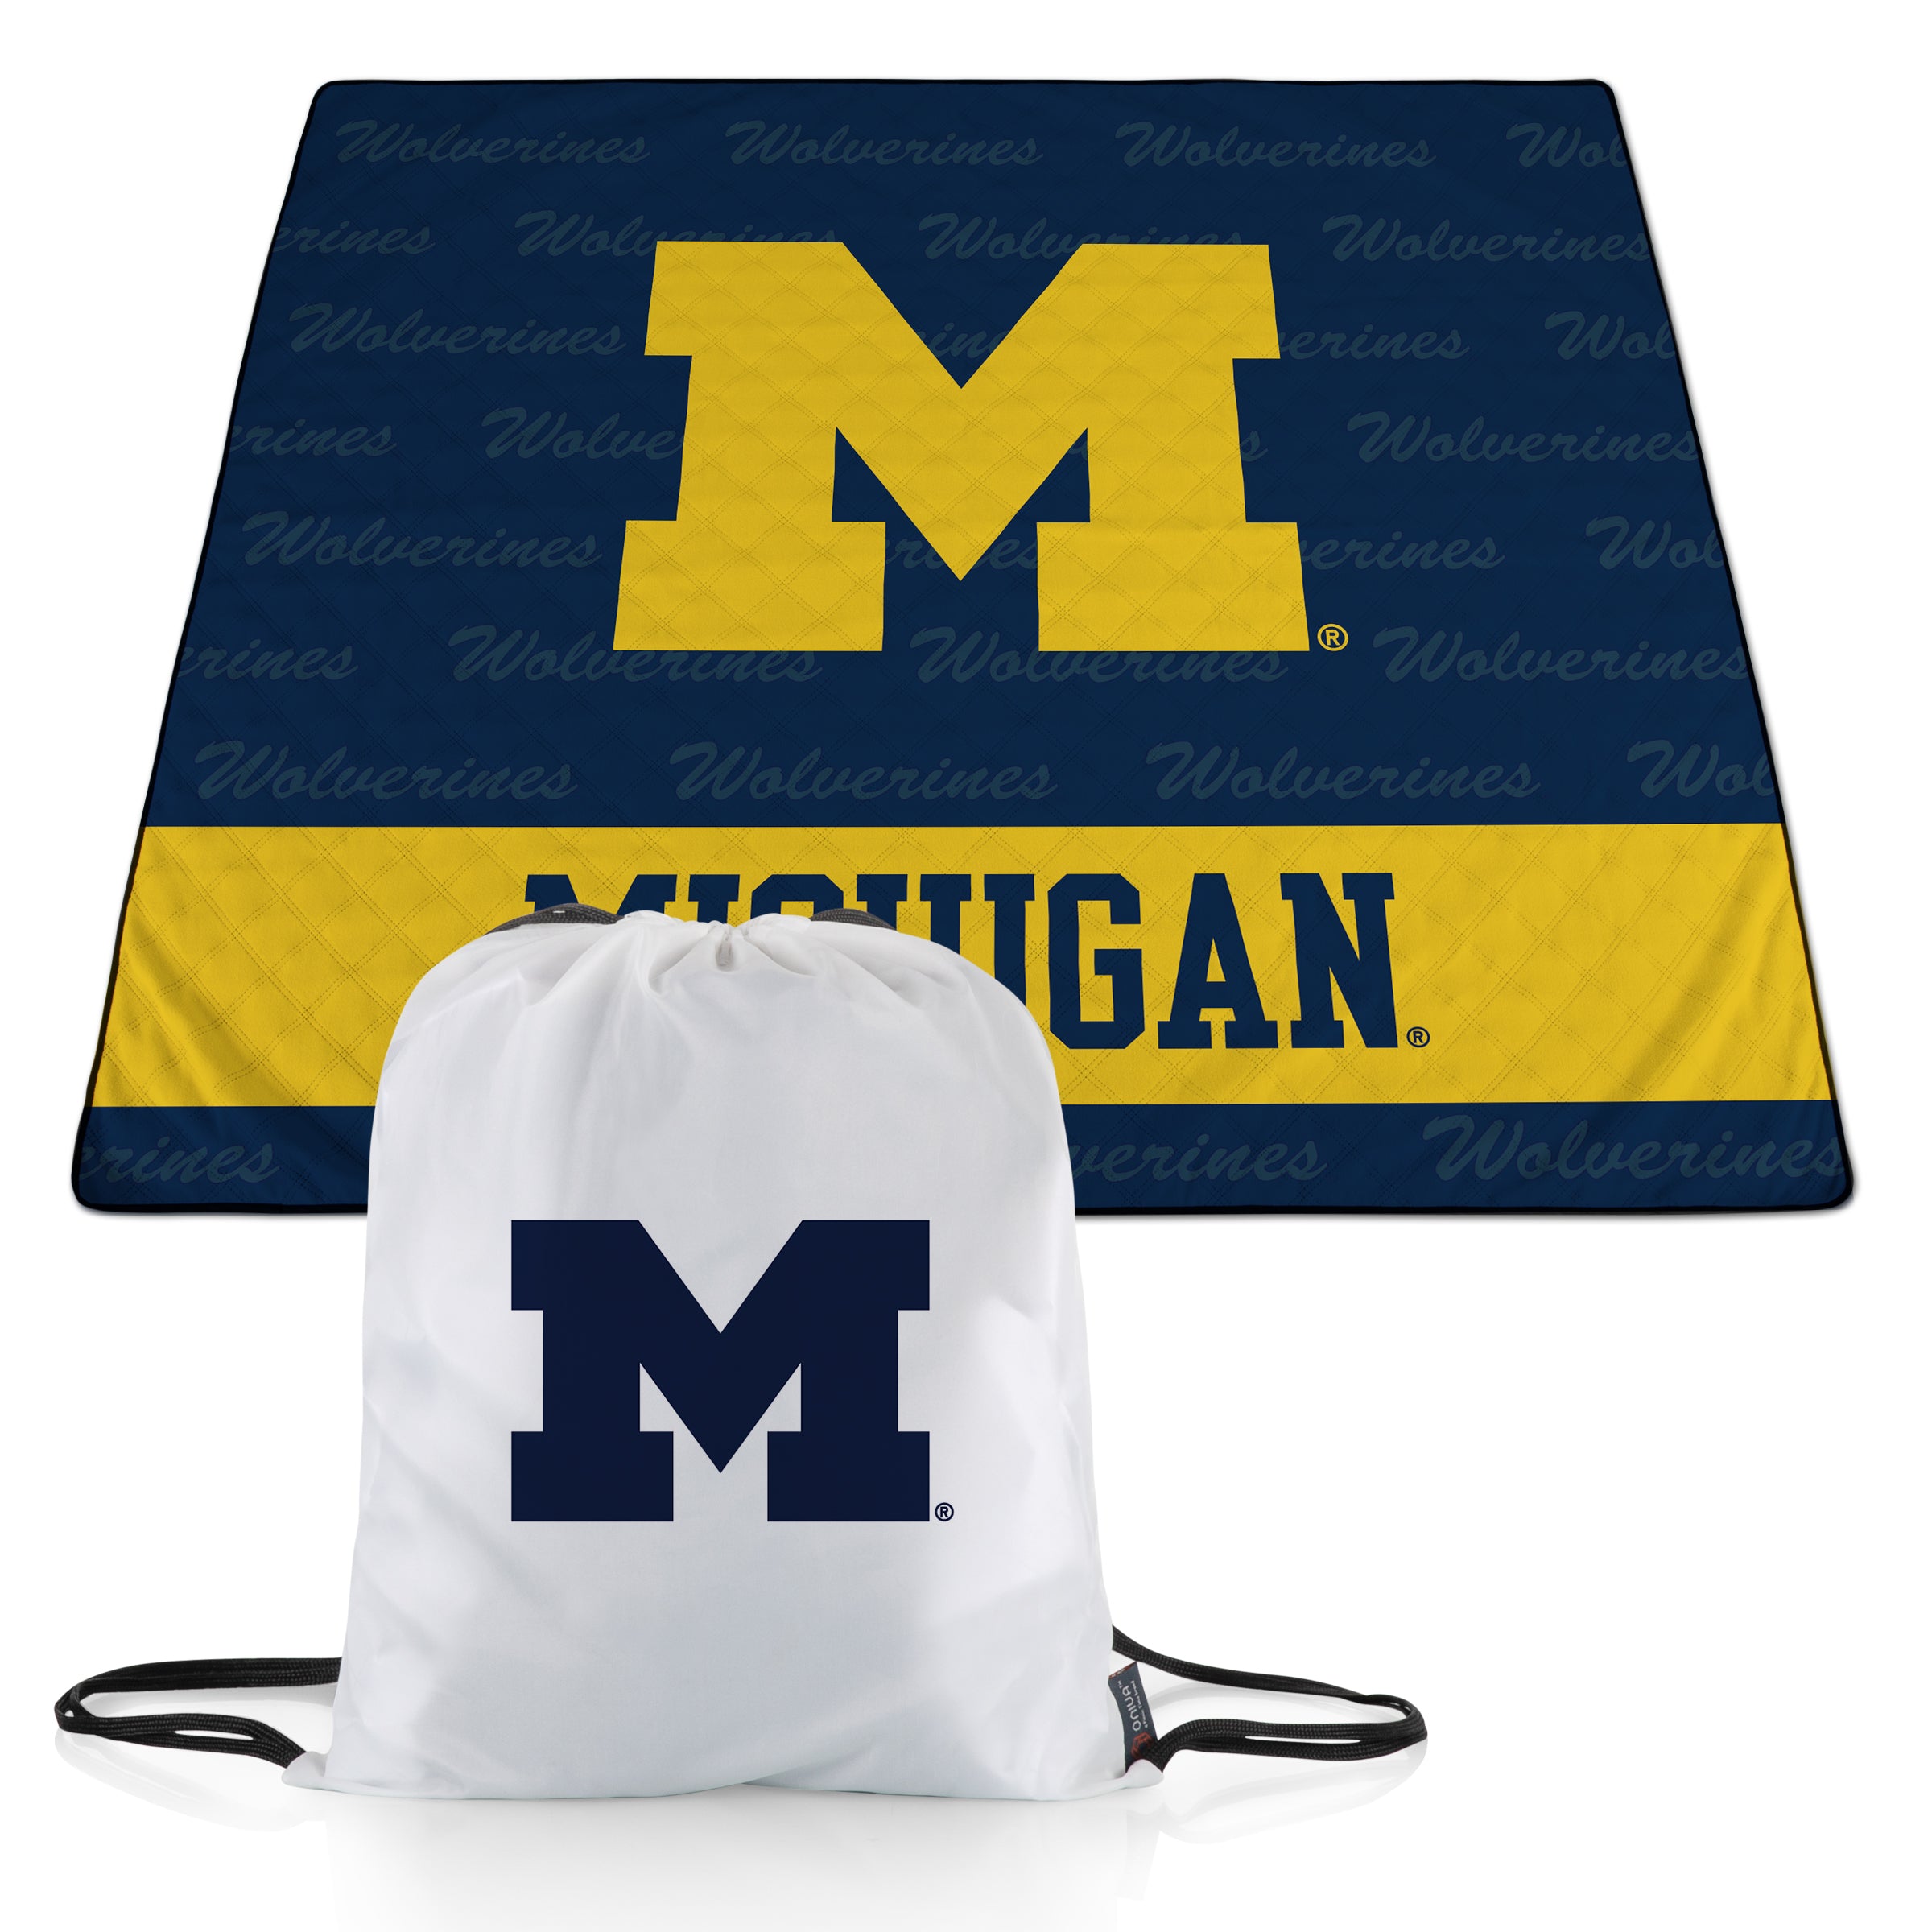 Michigan Wolverines - Impresa Picnic Blanket